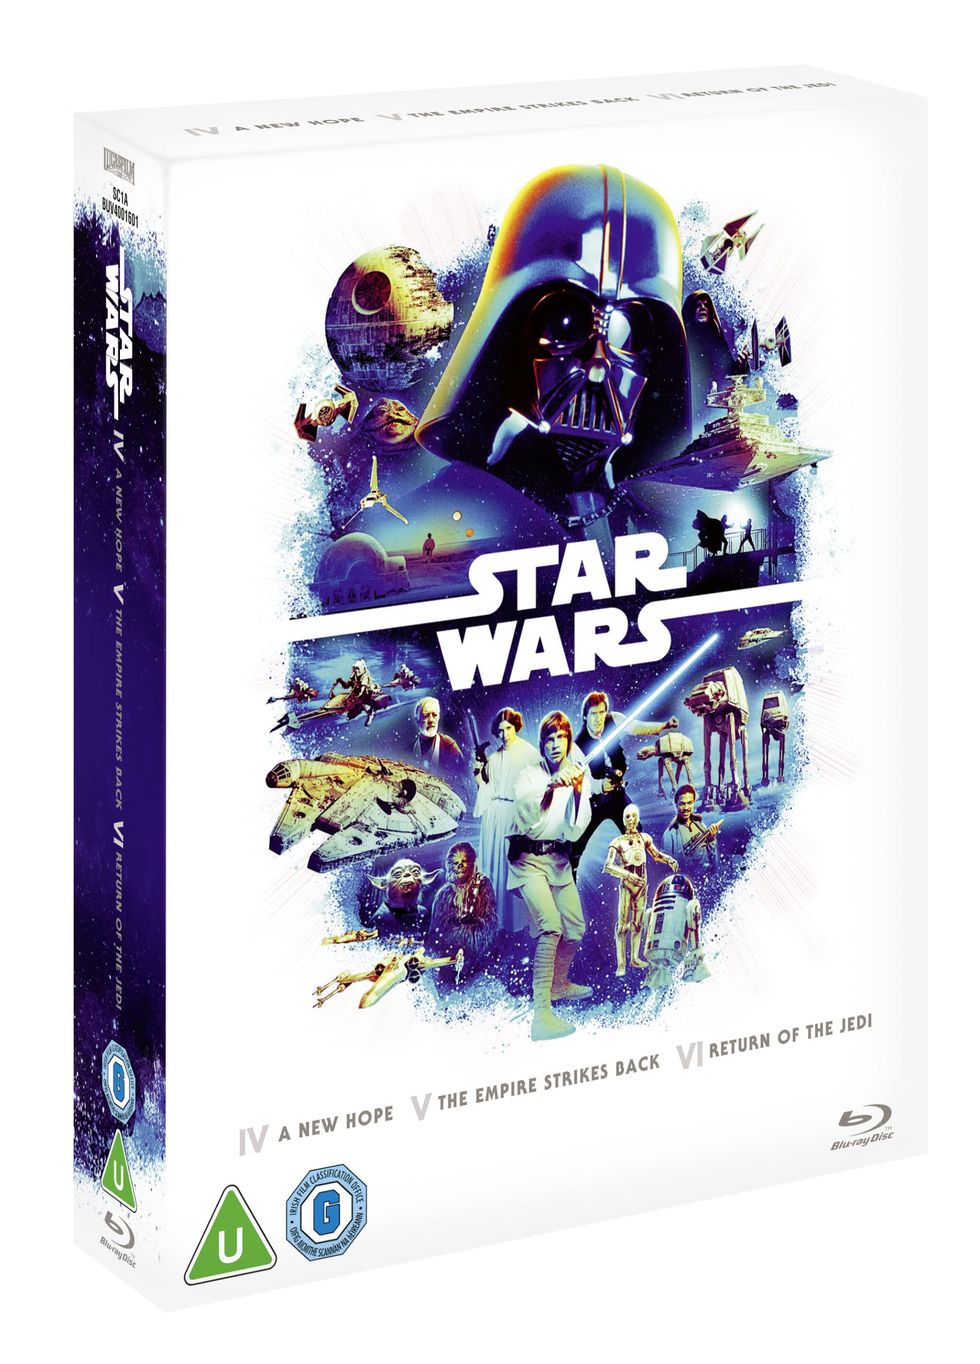 Star Wars Original Trilogy box set